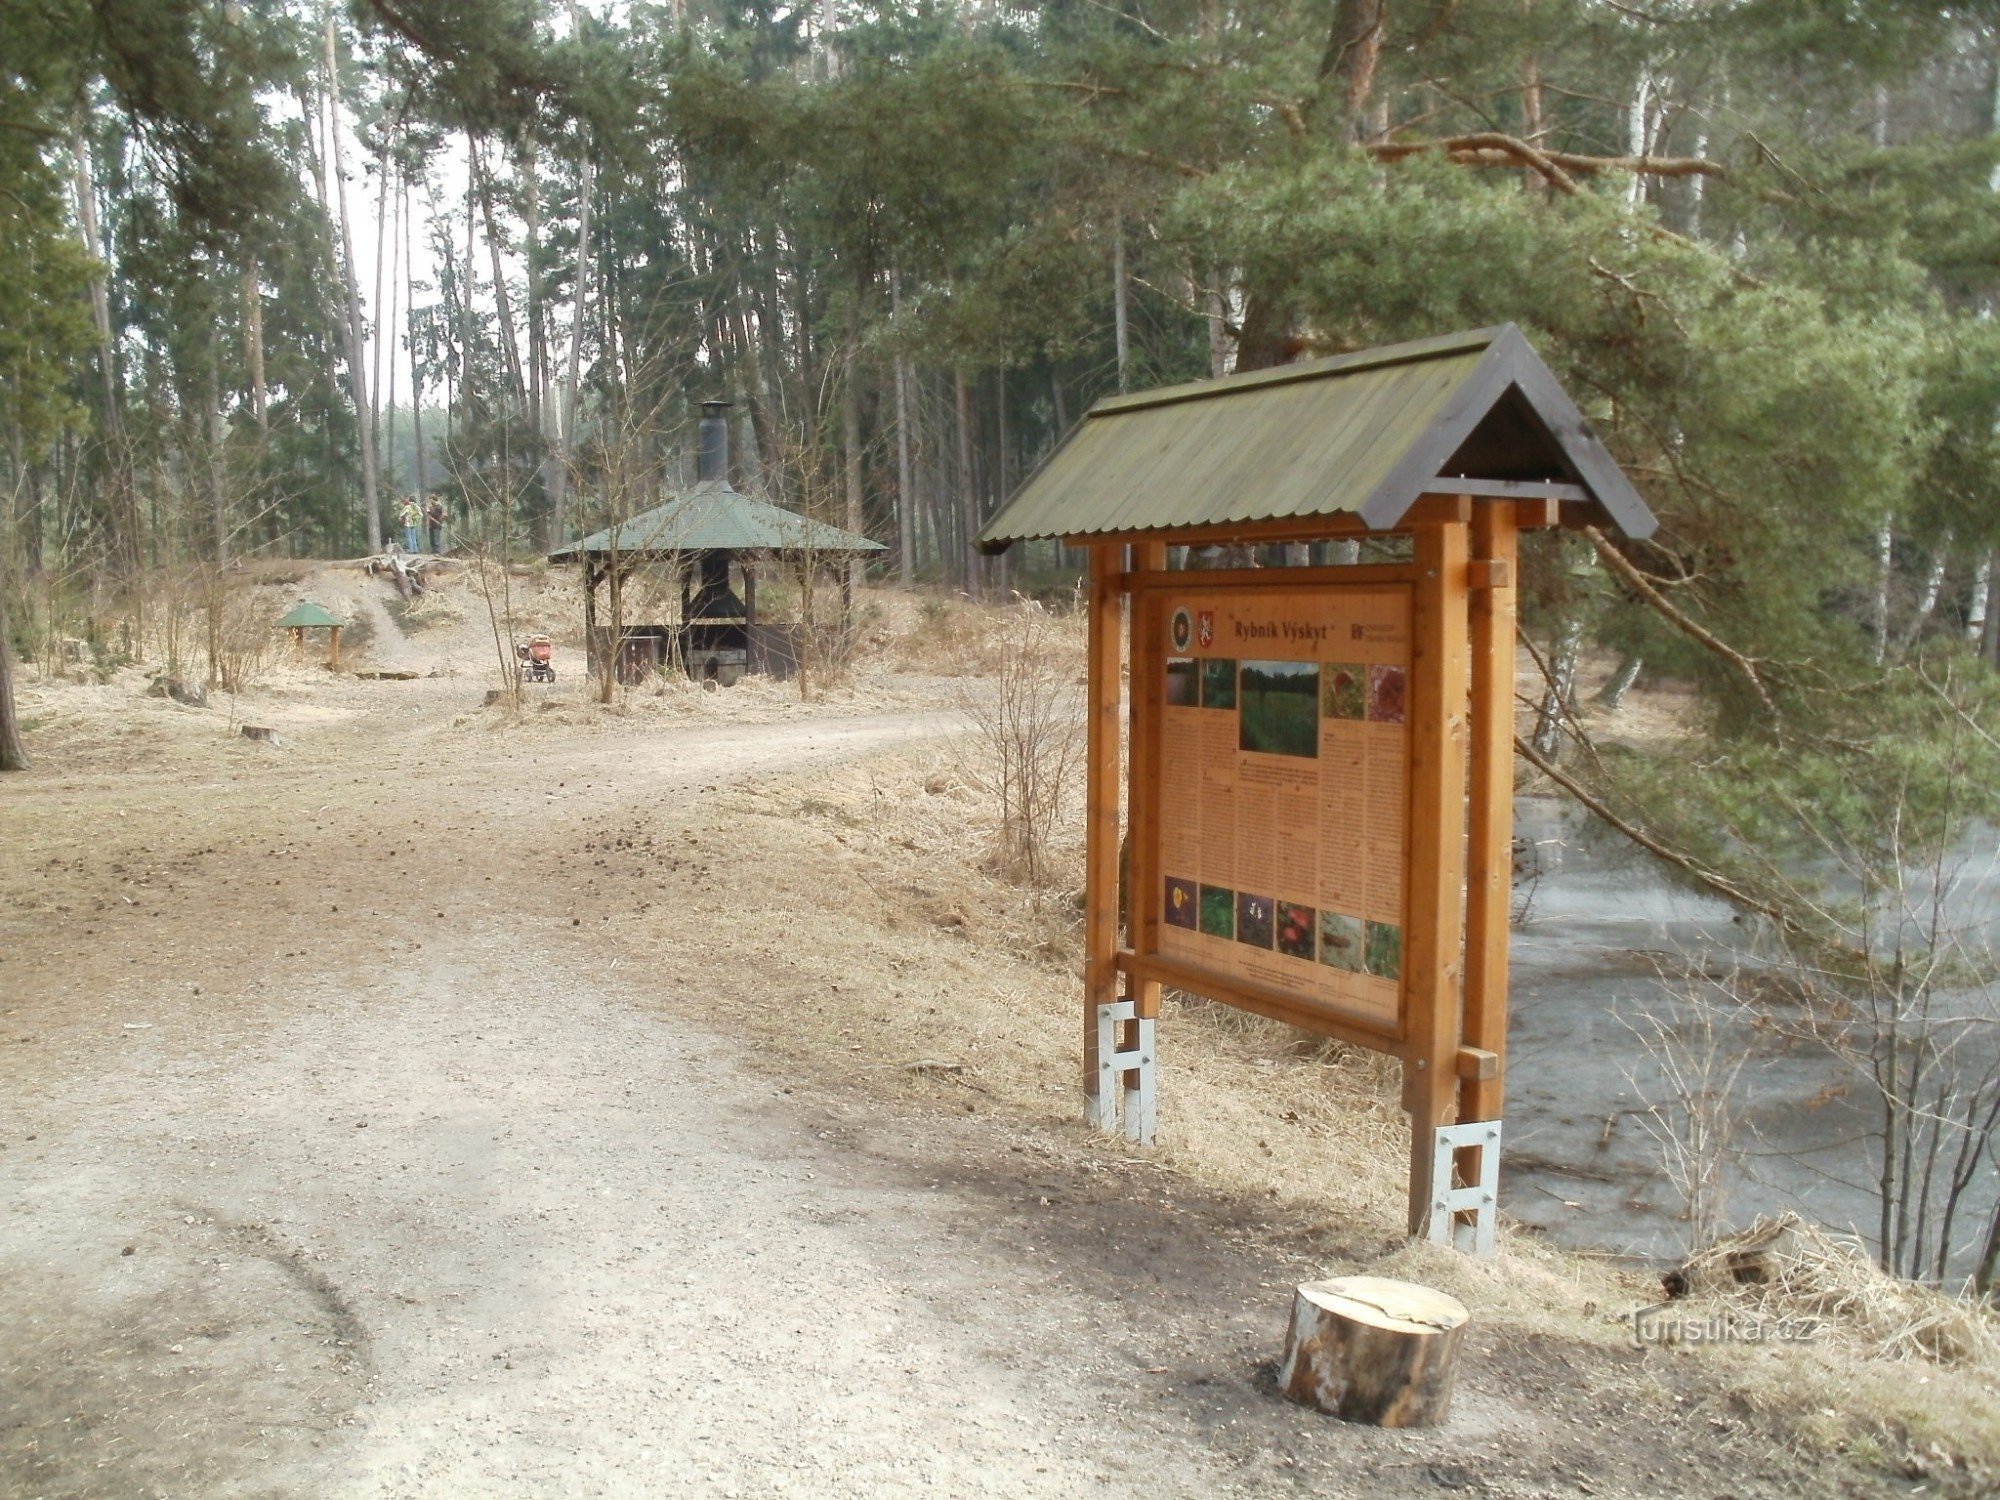 Touristenkreuzung Teich Vyskyt - Hradecké lesy